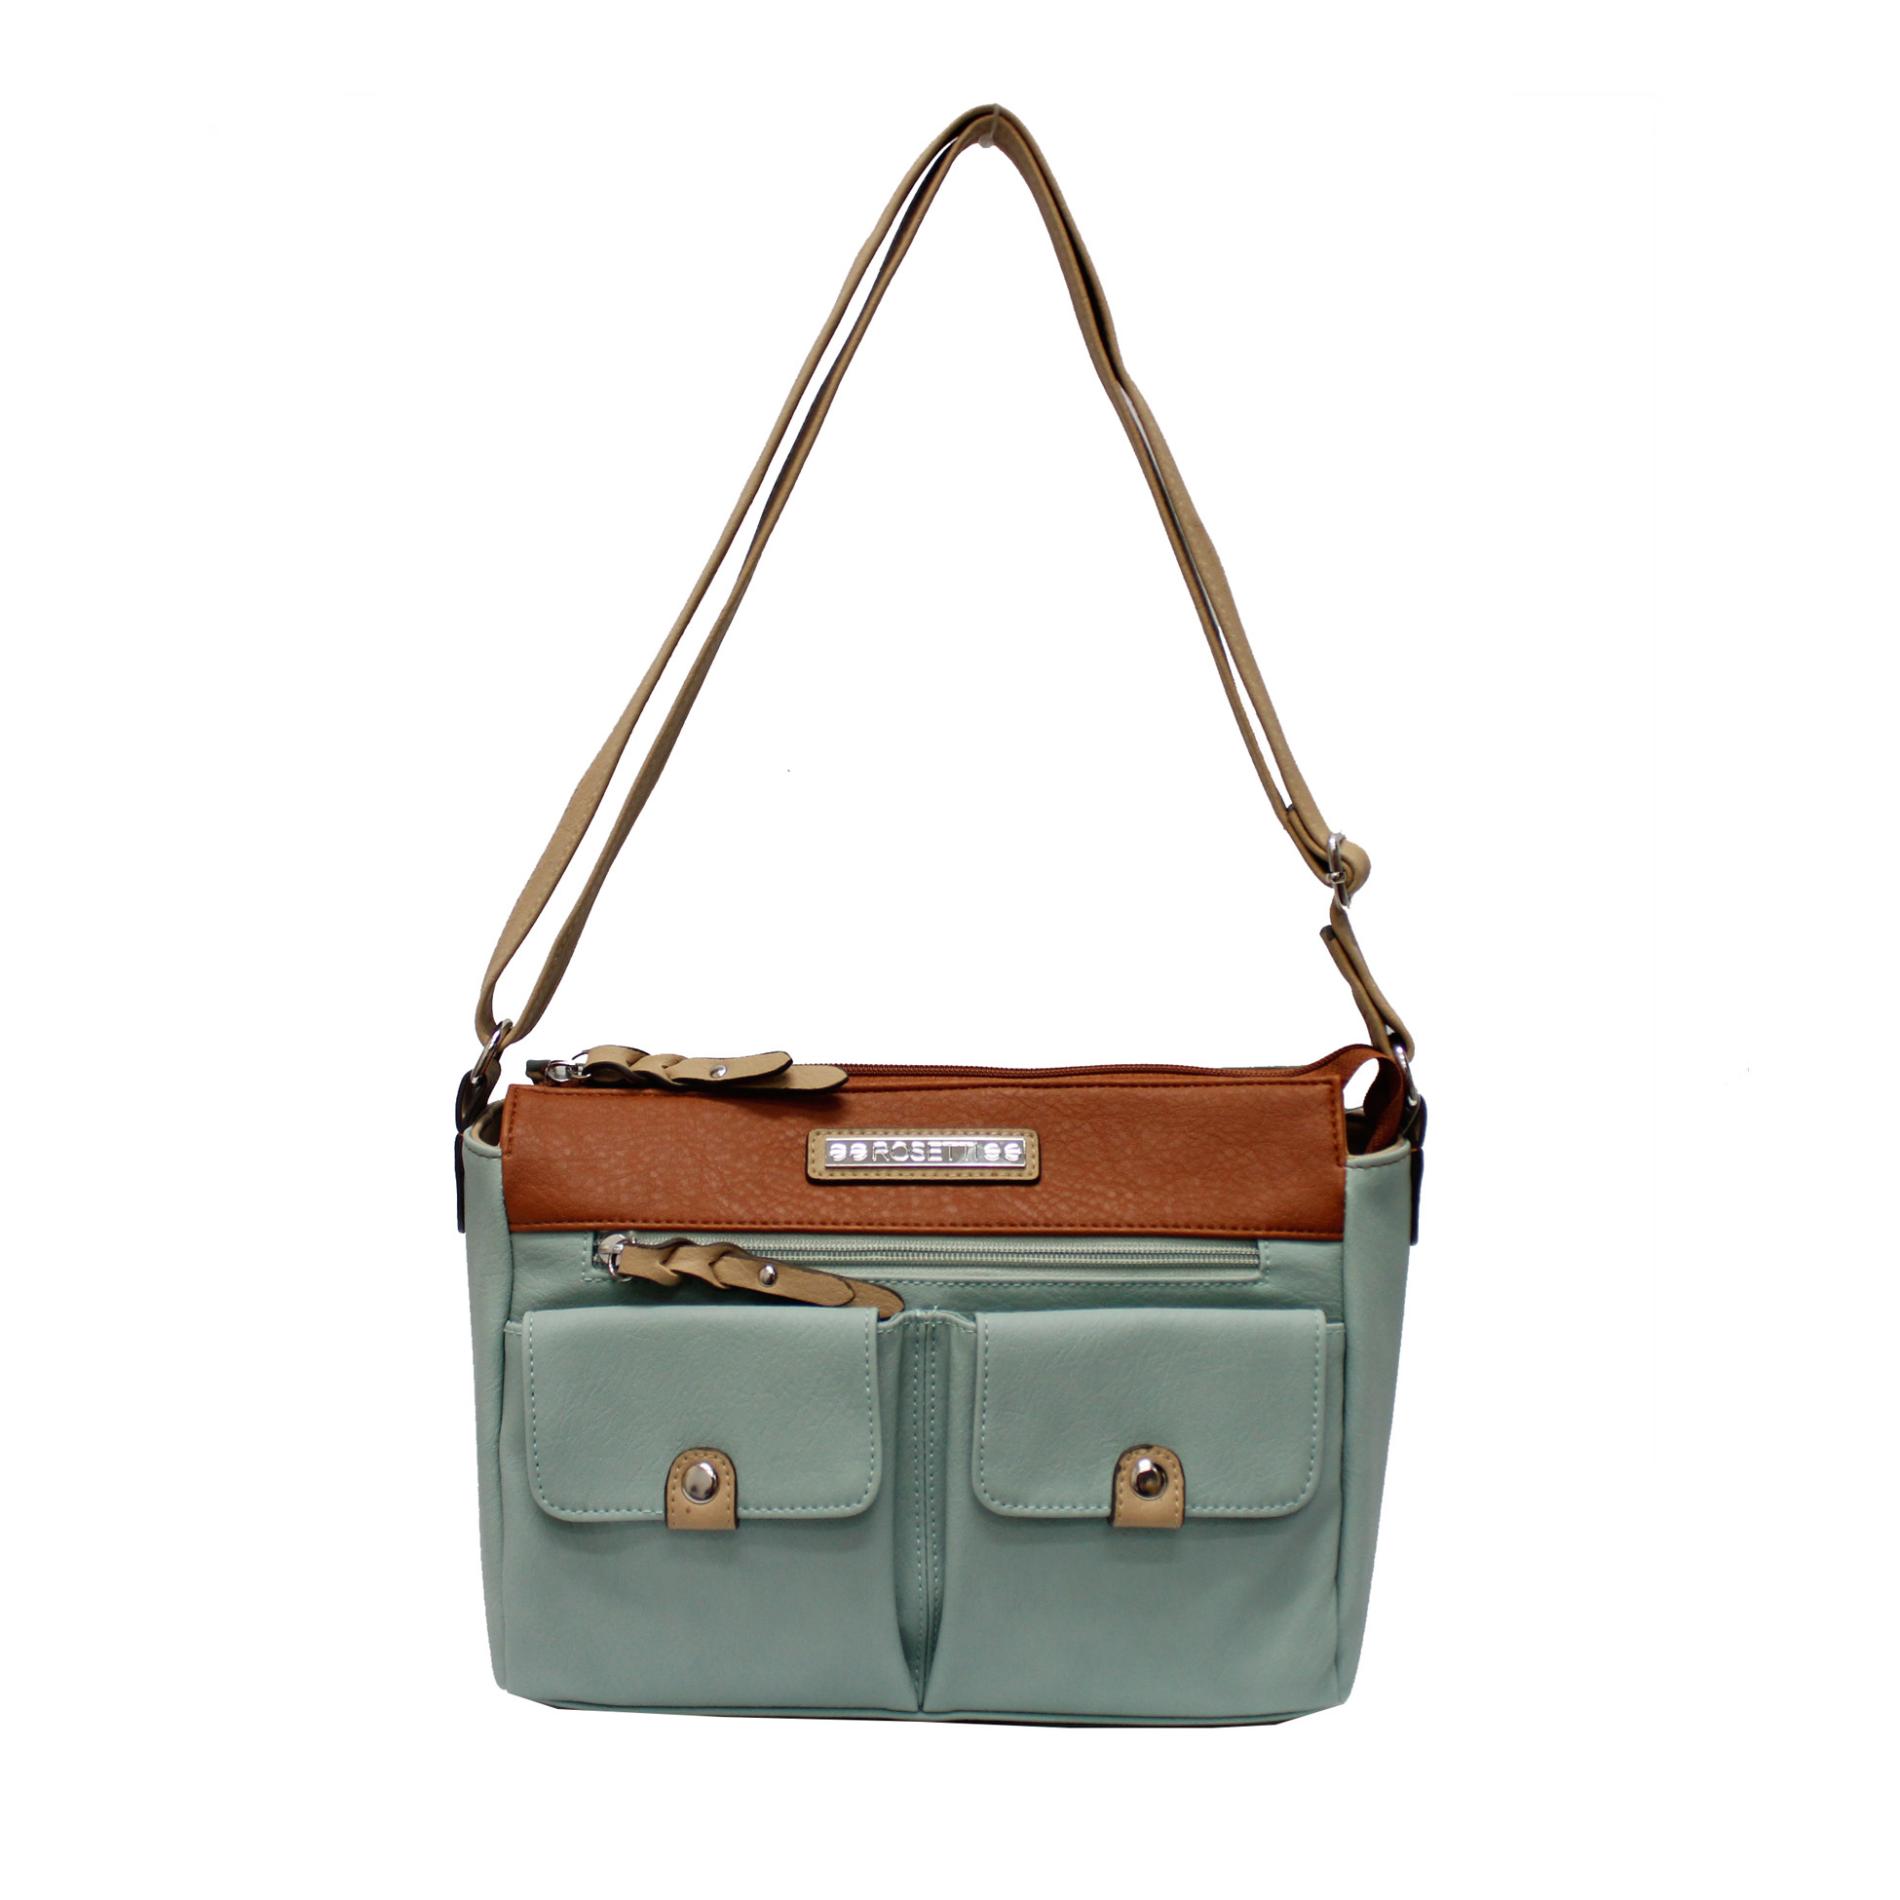 Rosetti Women's Pocket Change Convertible Handbag